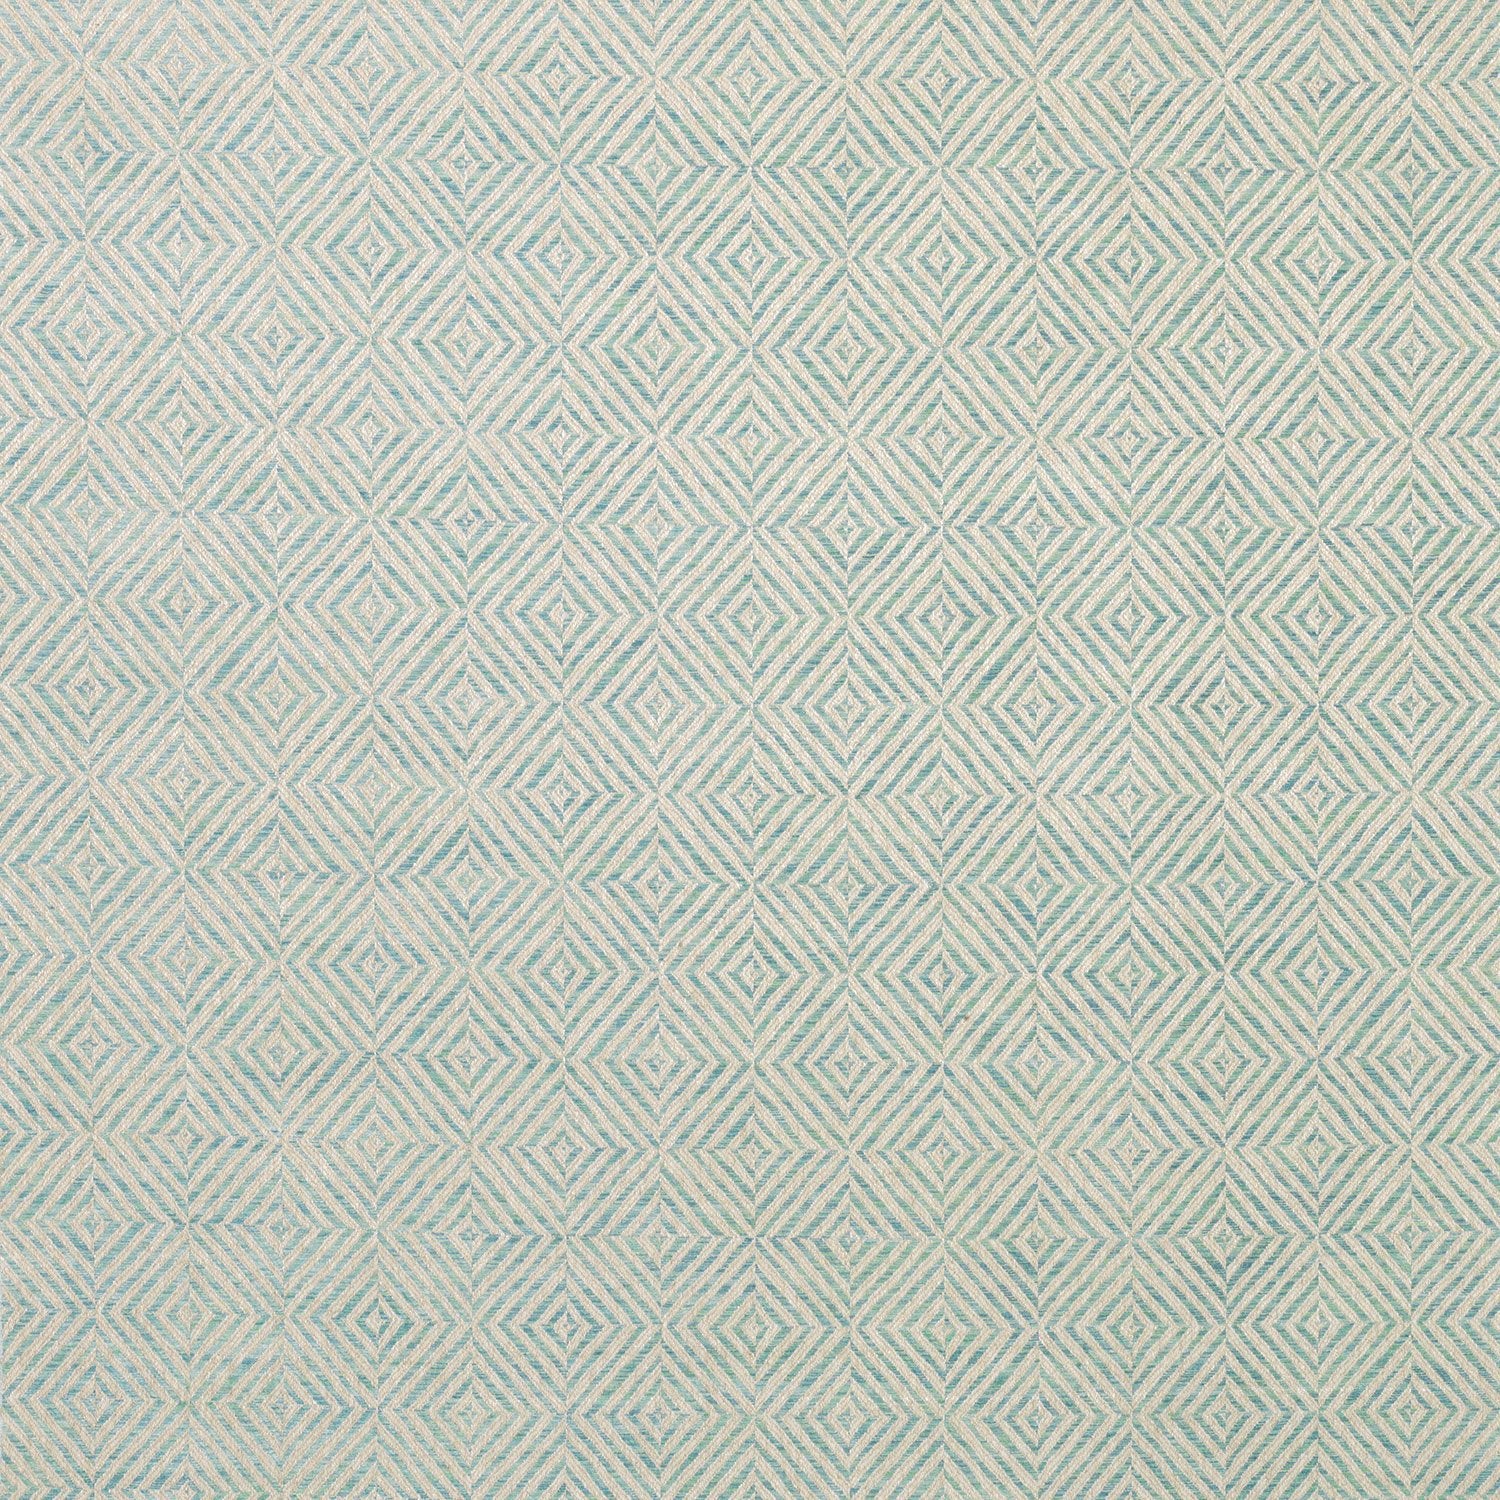 Nina Campbell Fabric - Umbria Assisi Aqua NCF4260-01